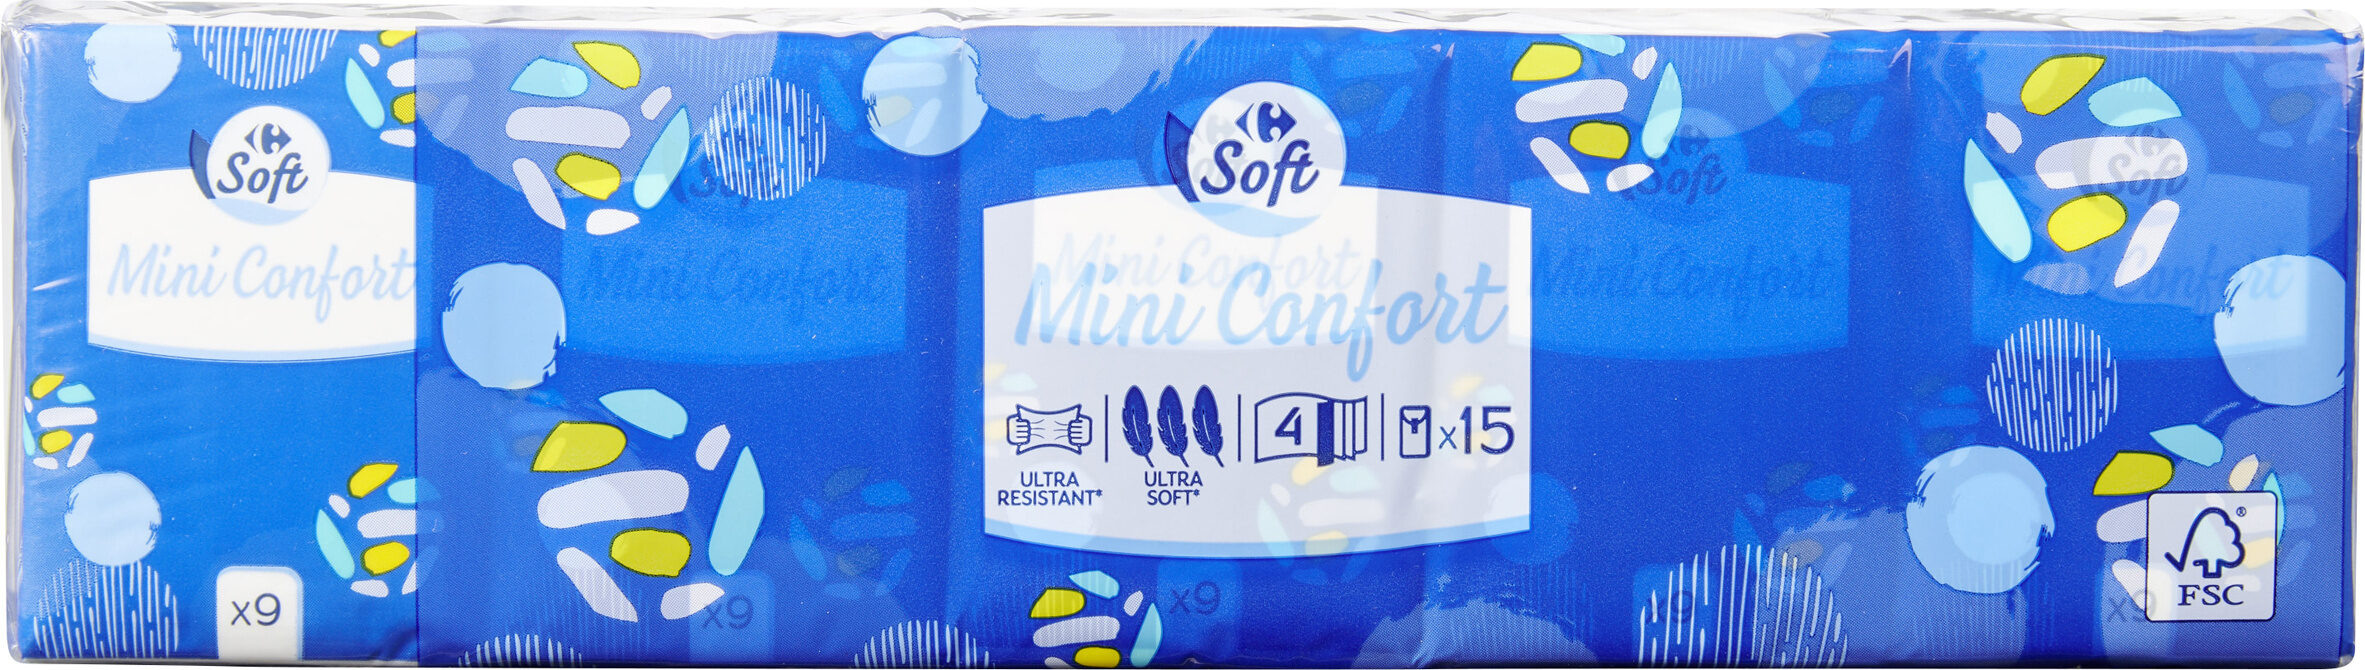 mini confort - Produto - fr